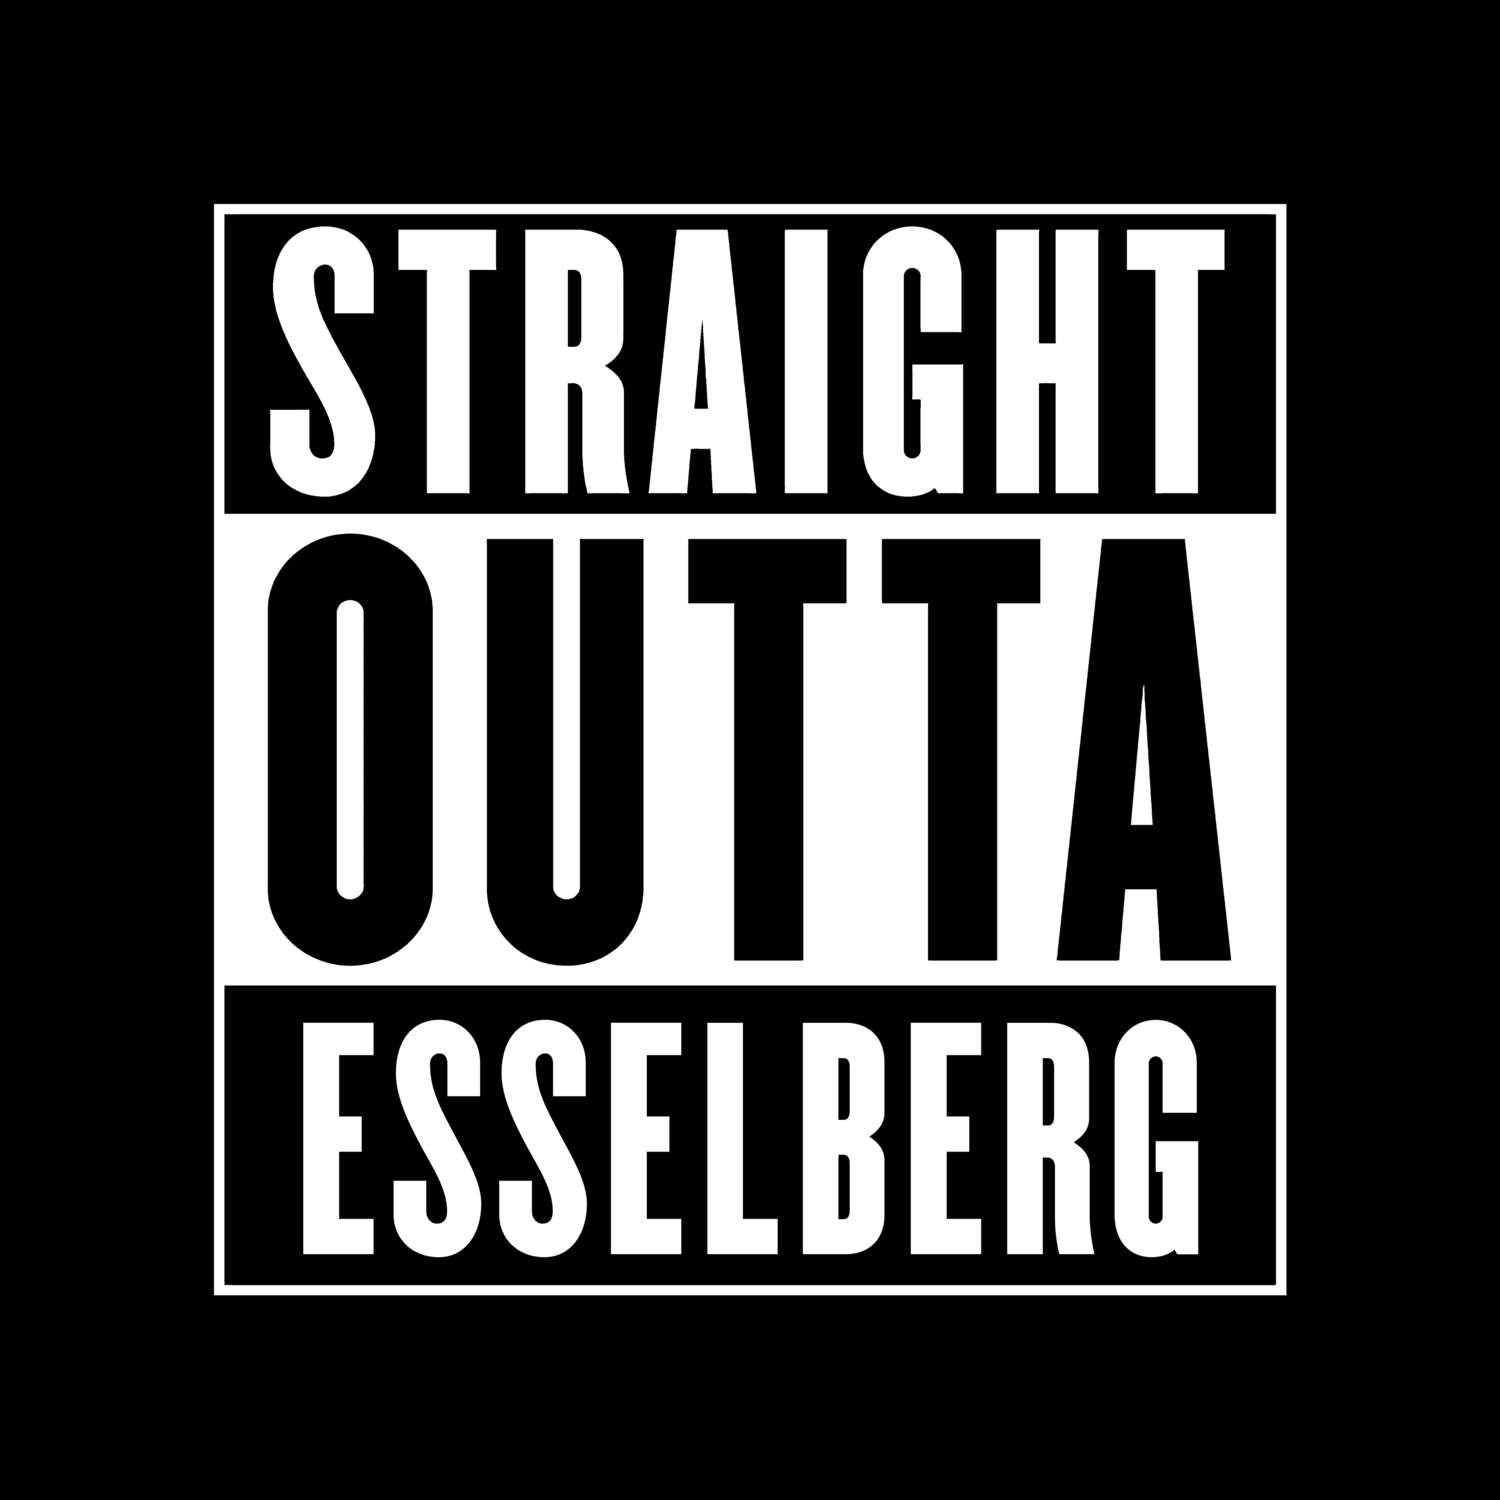 Esselberg T-Shirt »Straight Outta«